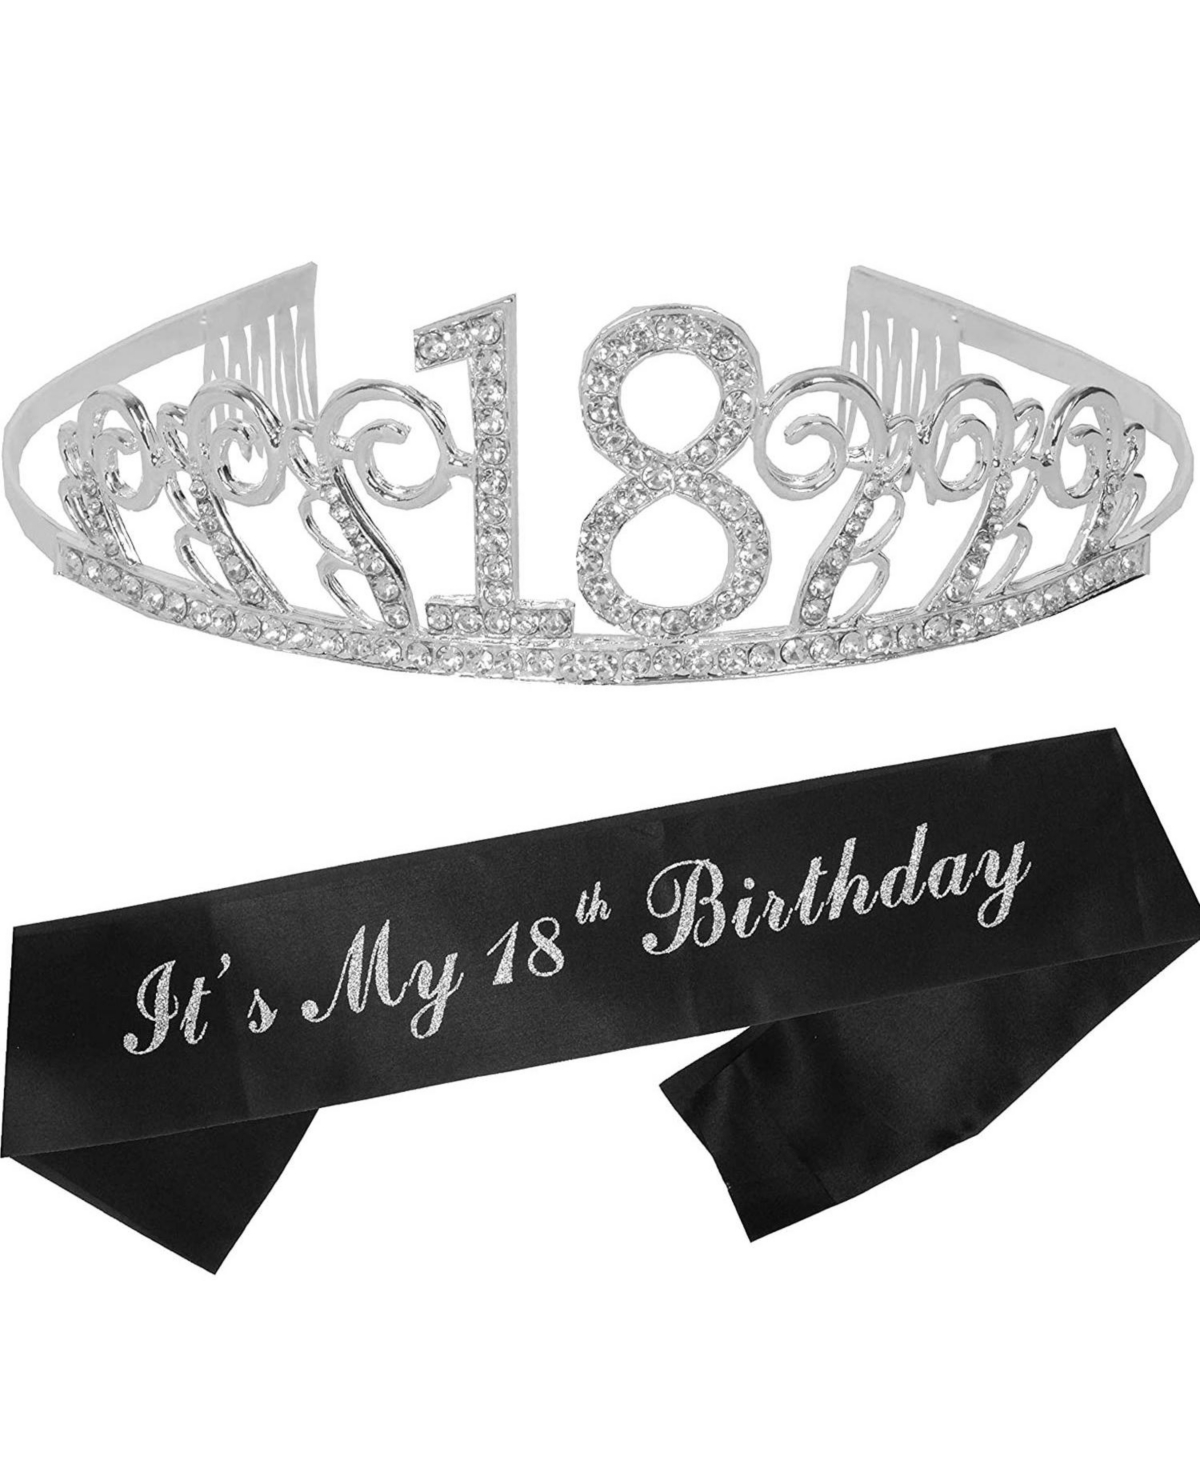 18th Birthday Sash and Tiara for Women - Fabulous Set: Glitter Sash + Waves Rhinestone Premium Metal Tiara, 18th Birthday Gifts for Women Party - Silv